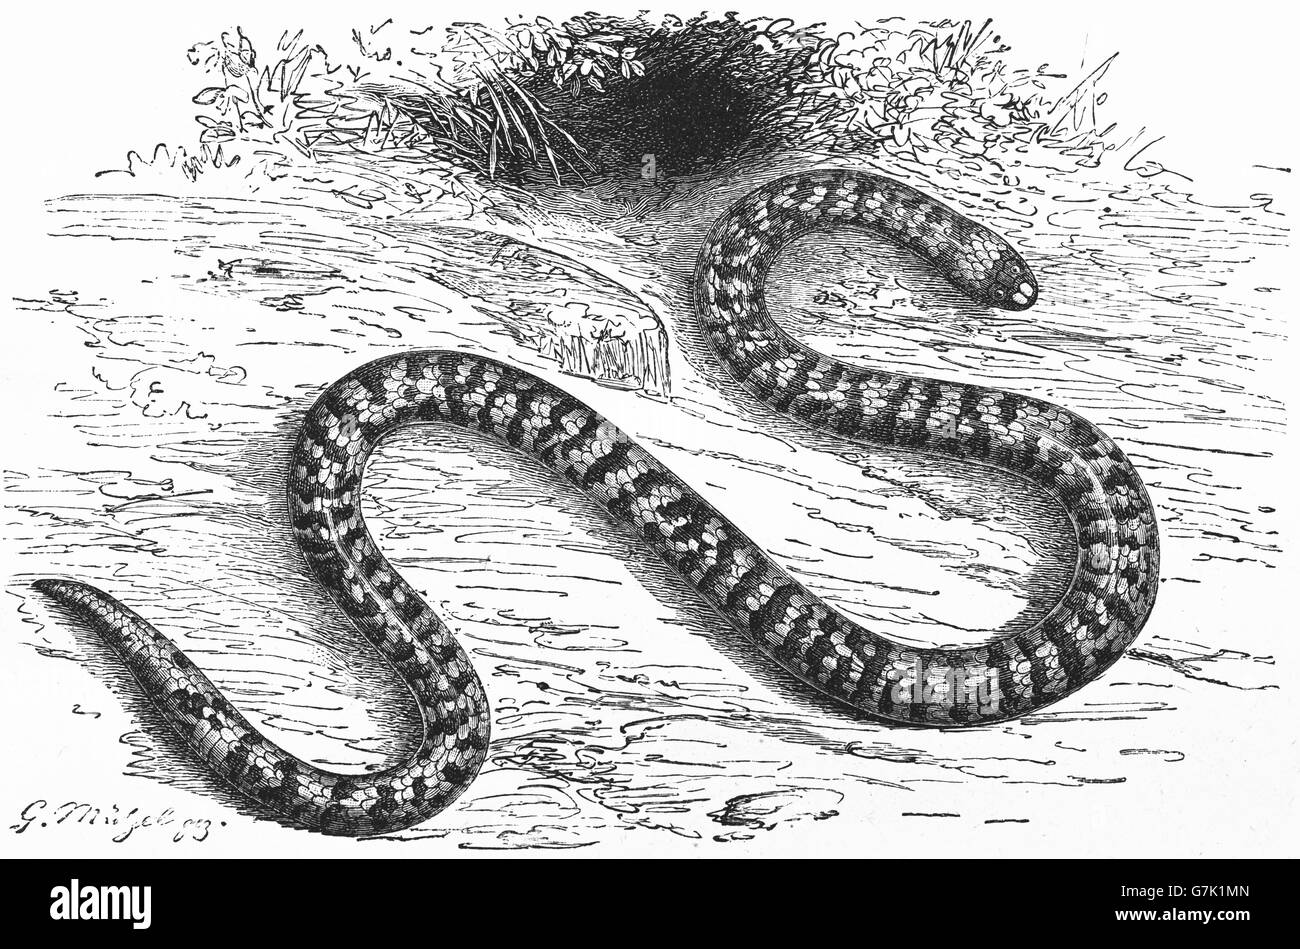 Anilius Scytale Pipe Snakes (Anilius Scytale) For Sale - Underground  Reptiles